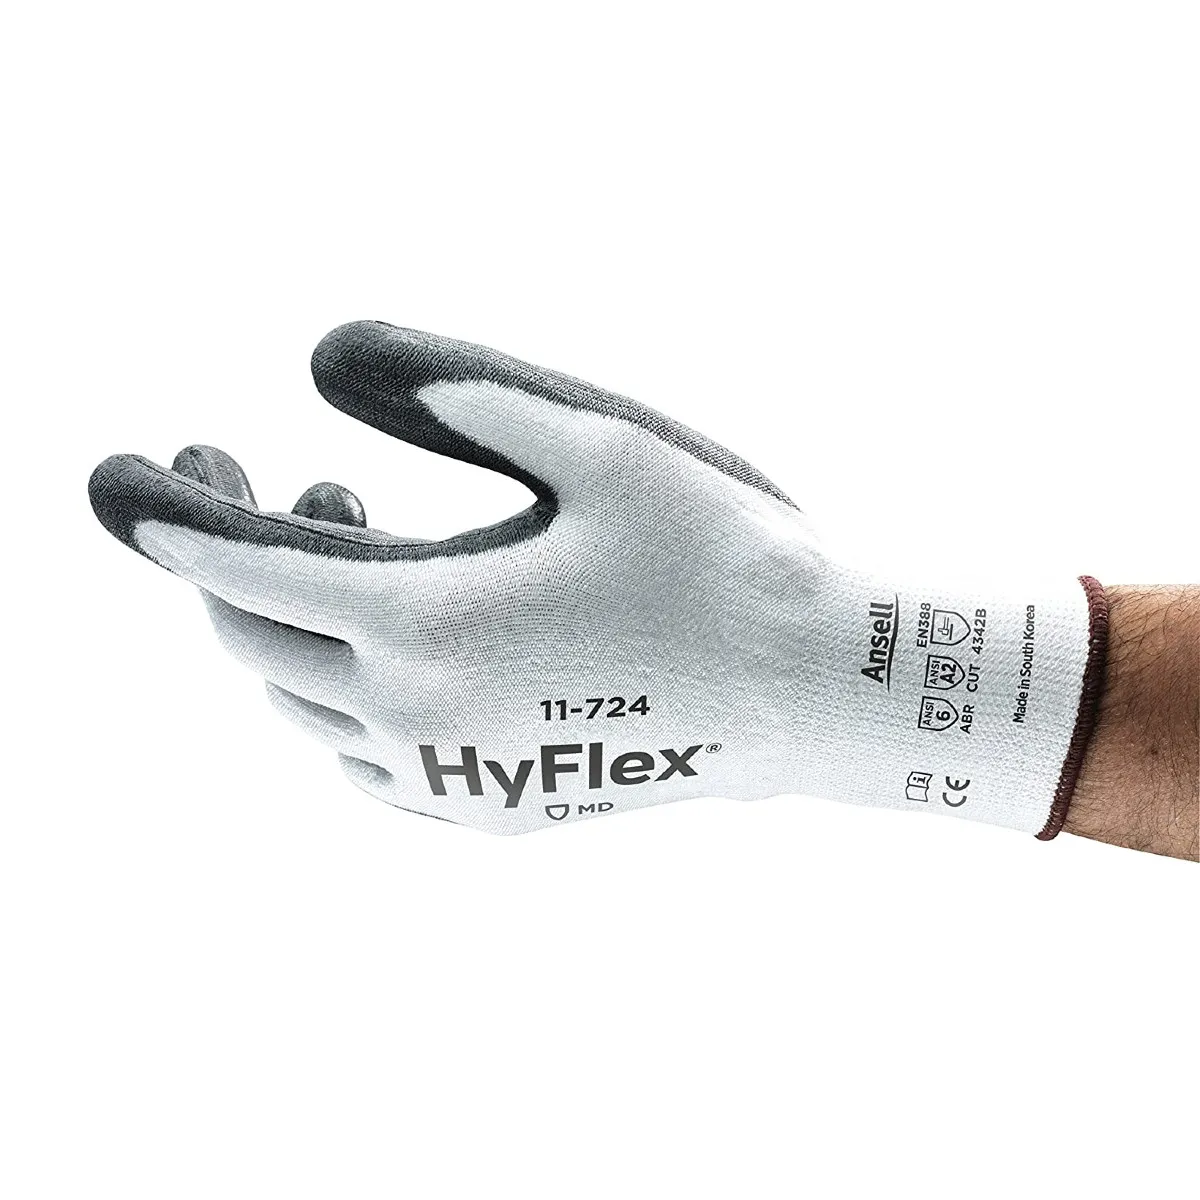 Zaštitne rukavice HYFLEX 11-724 belo-sive - Ansell - PAR 